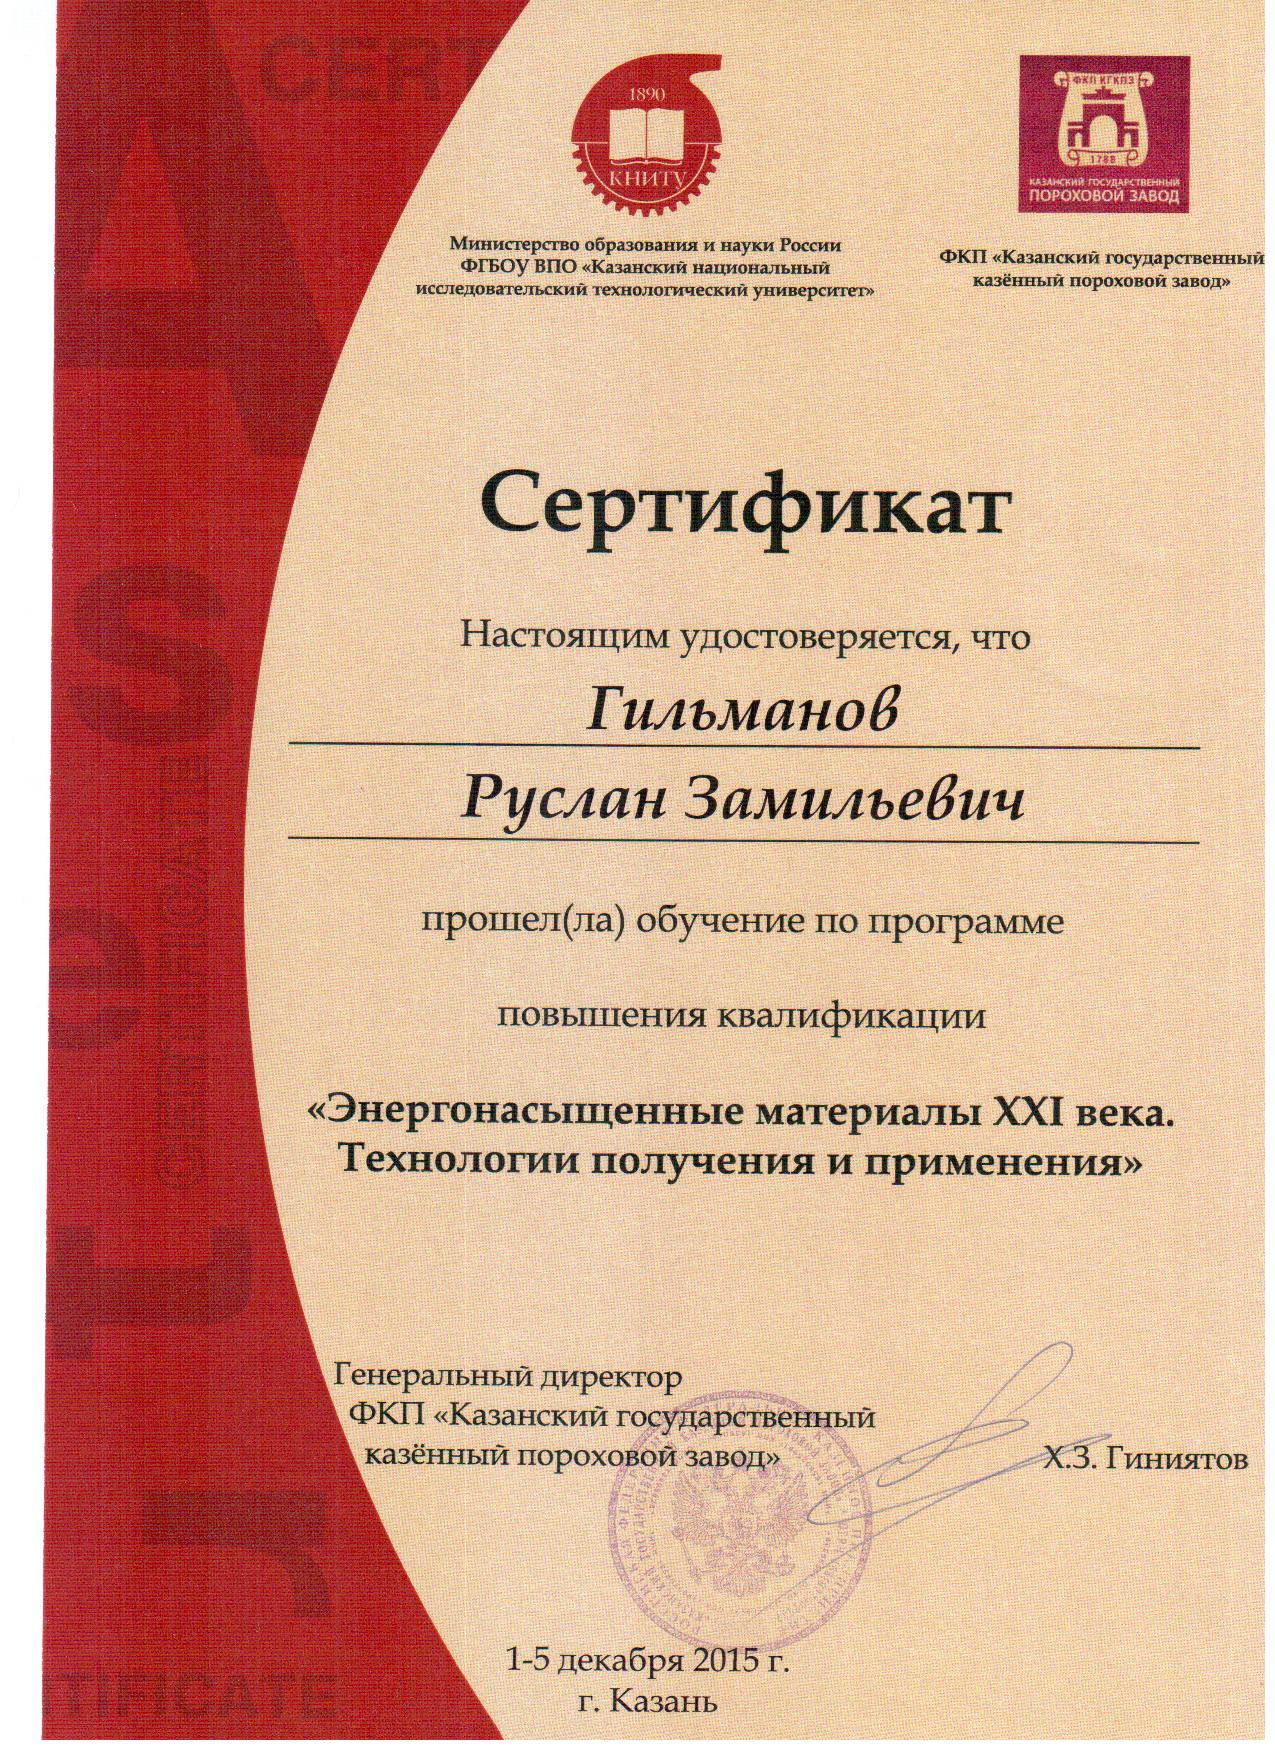 сертификат_2015.jpg